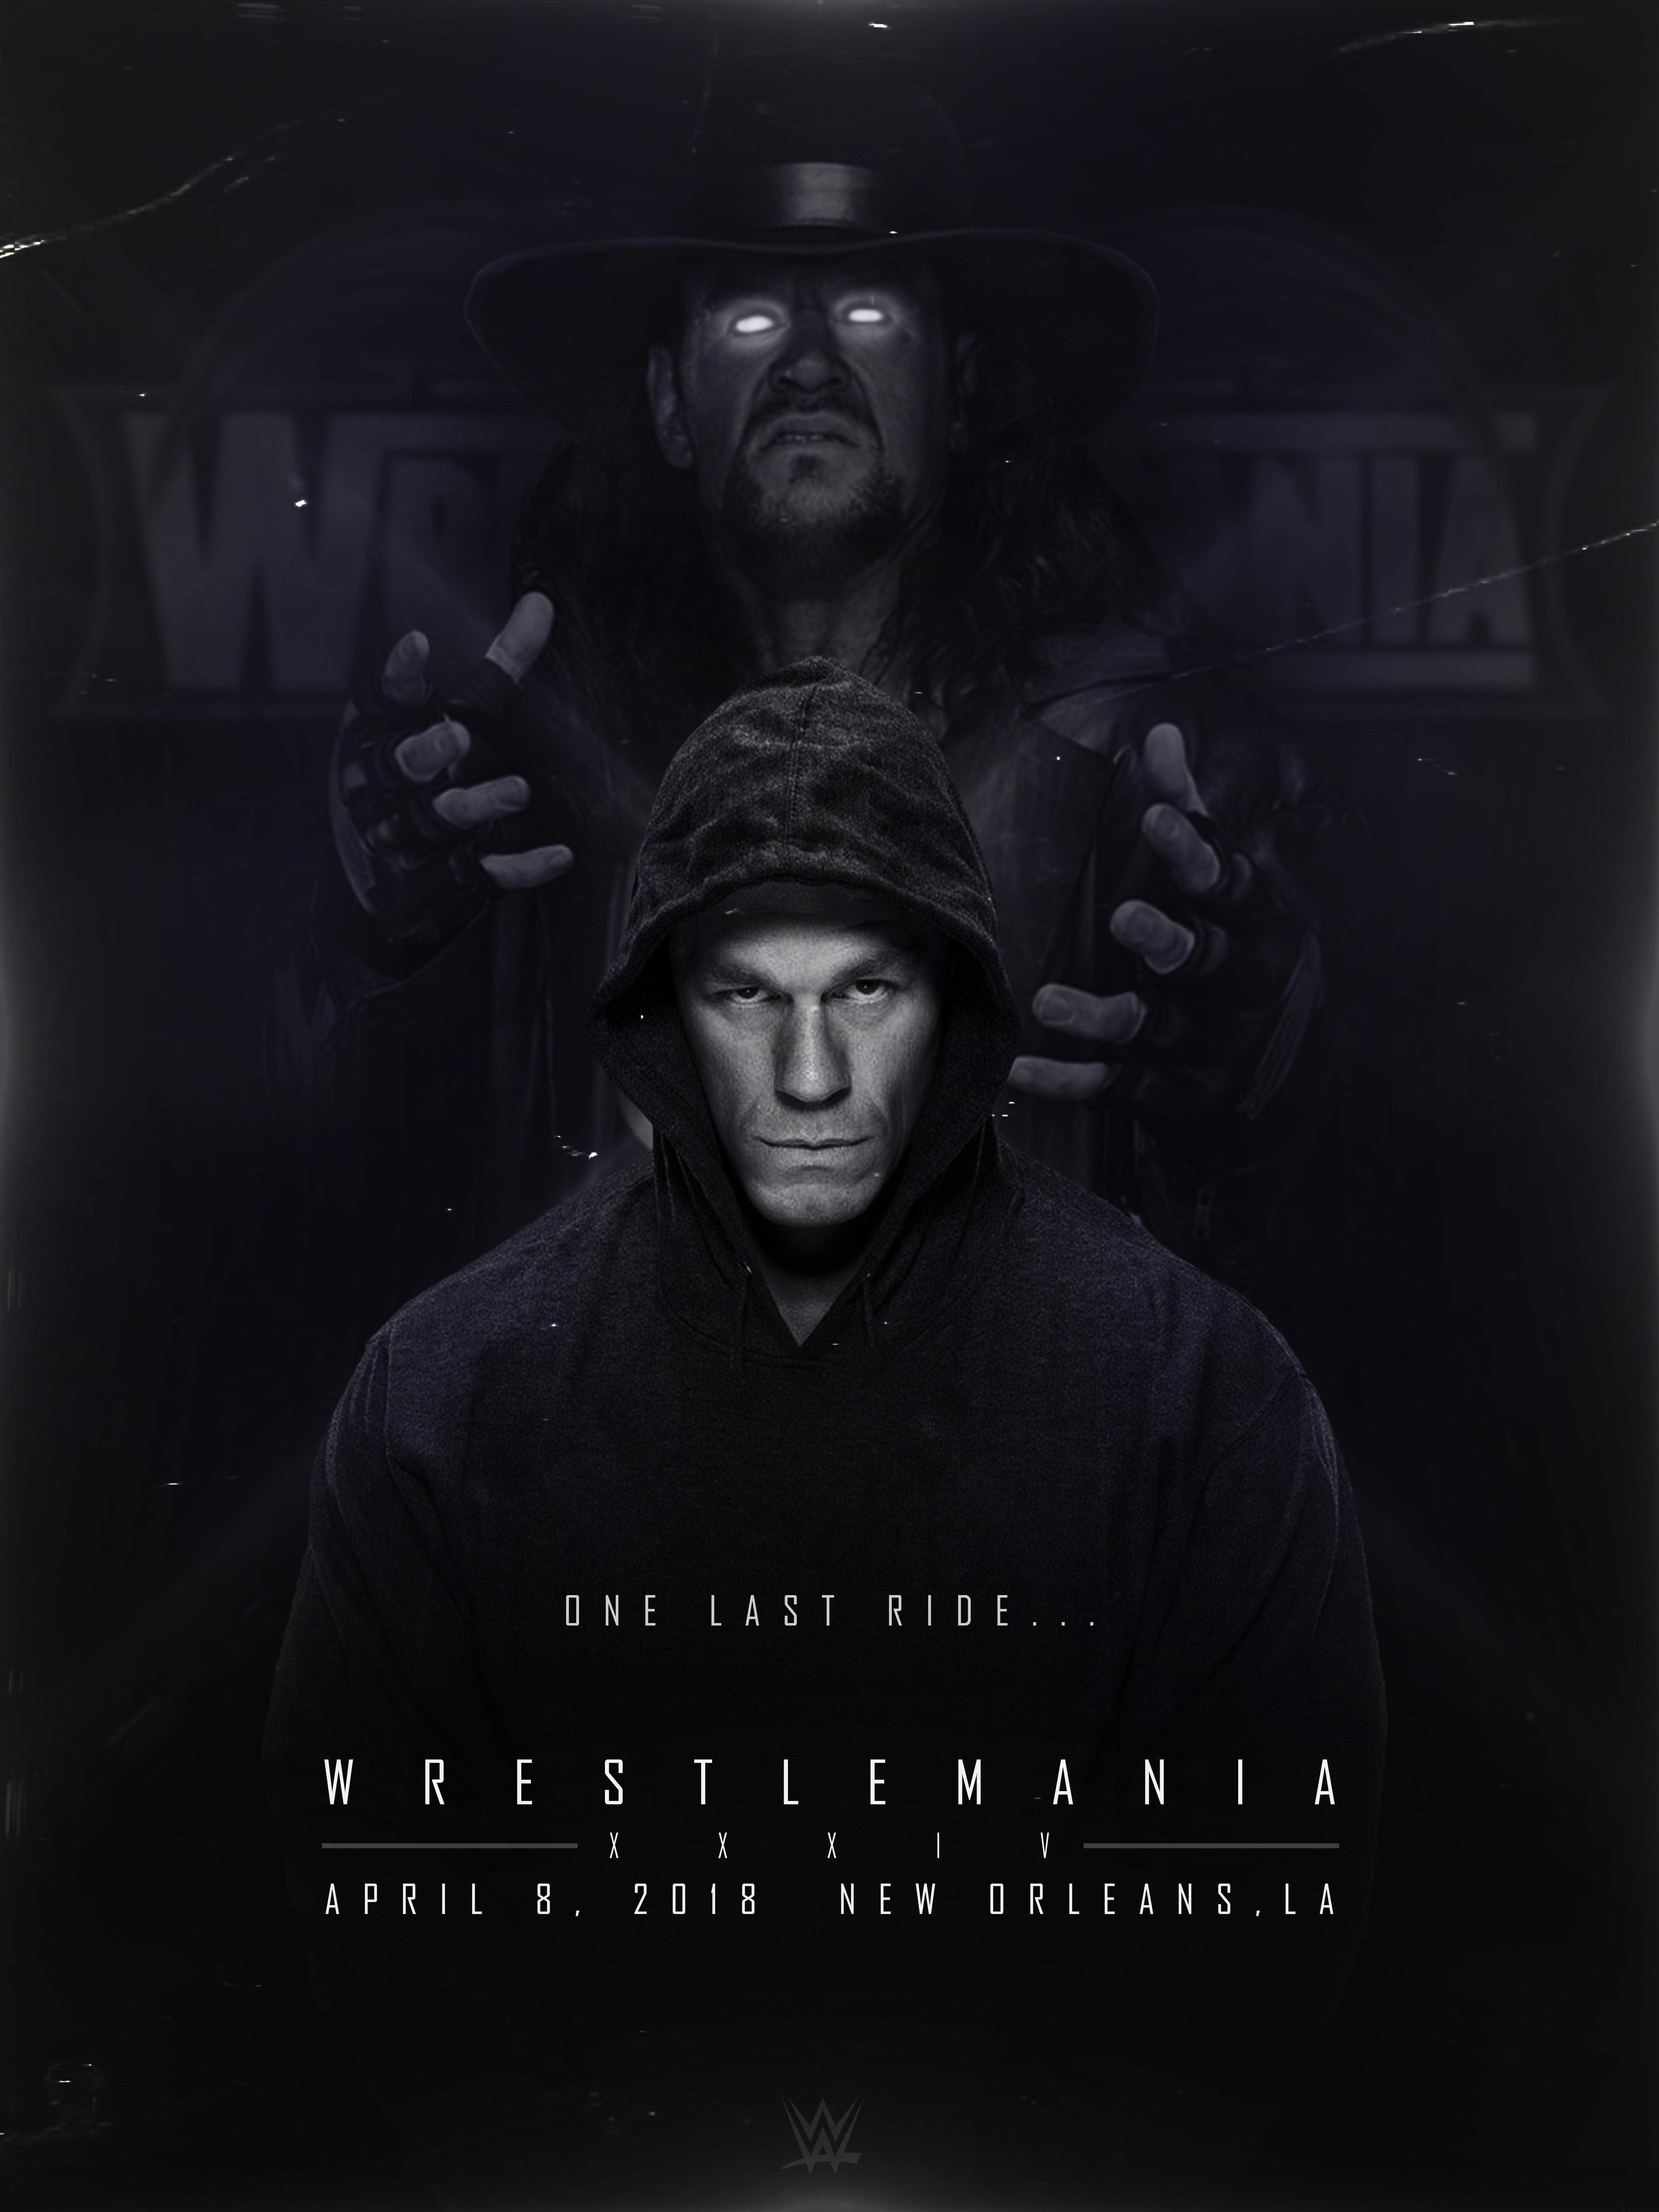 Wallpaper Of Made Concept Poster For The Undertaker Vs John Cena At